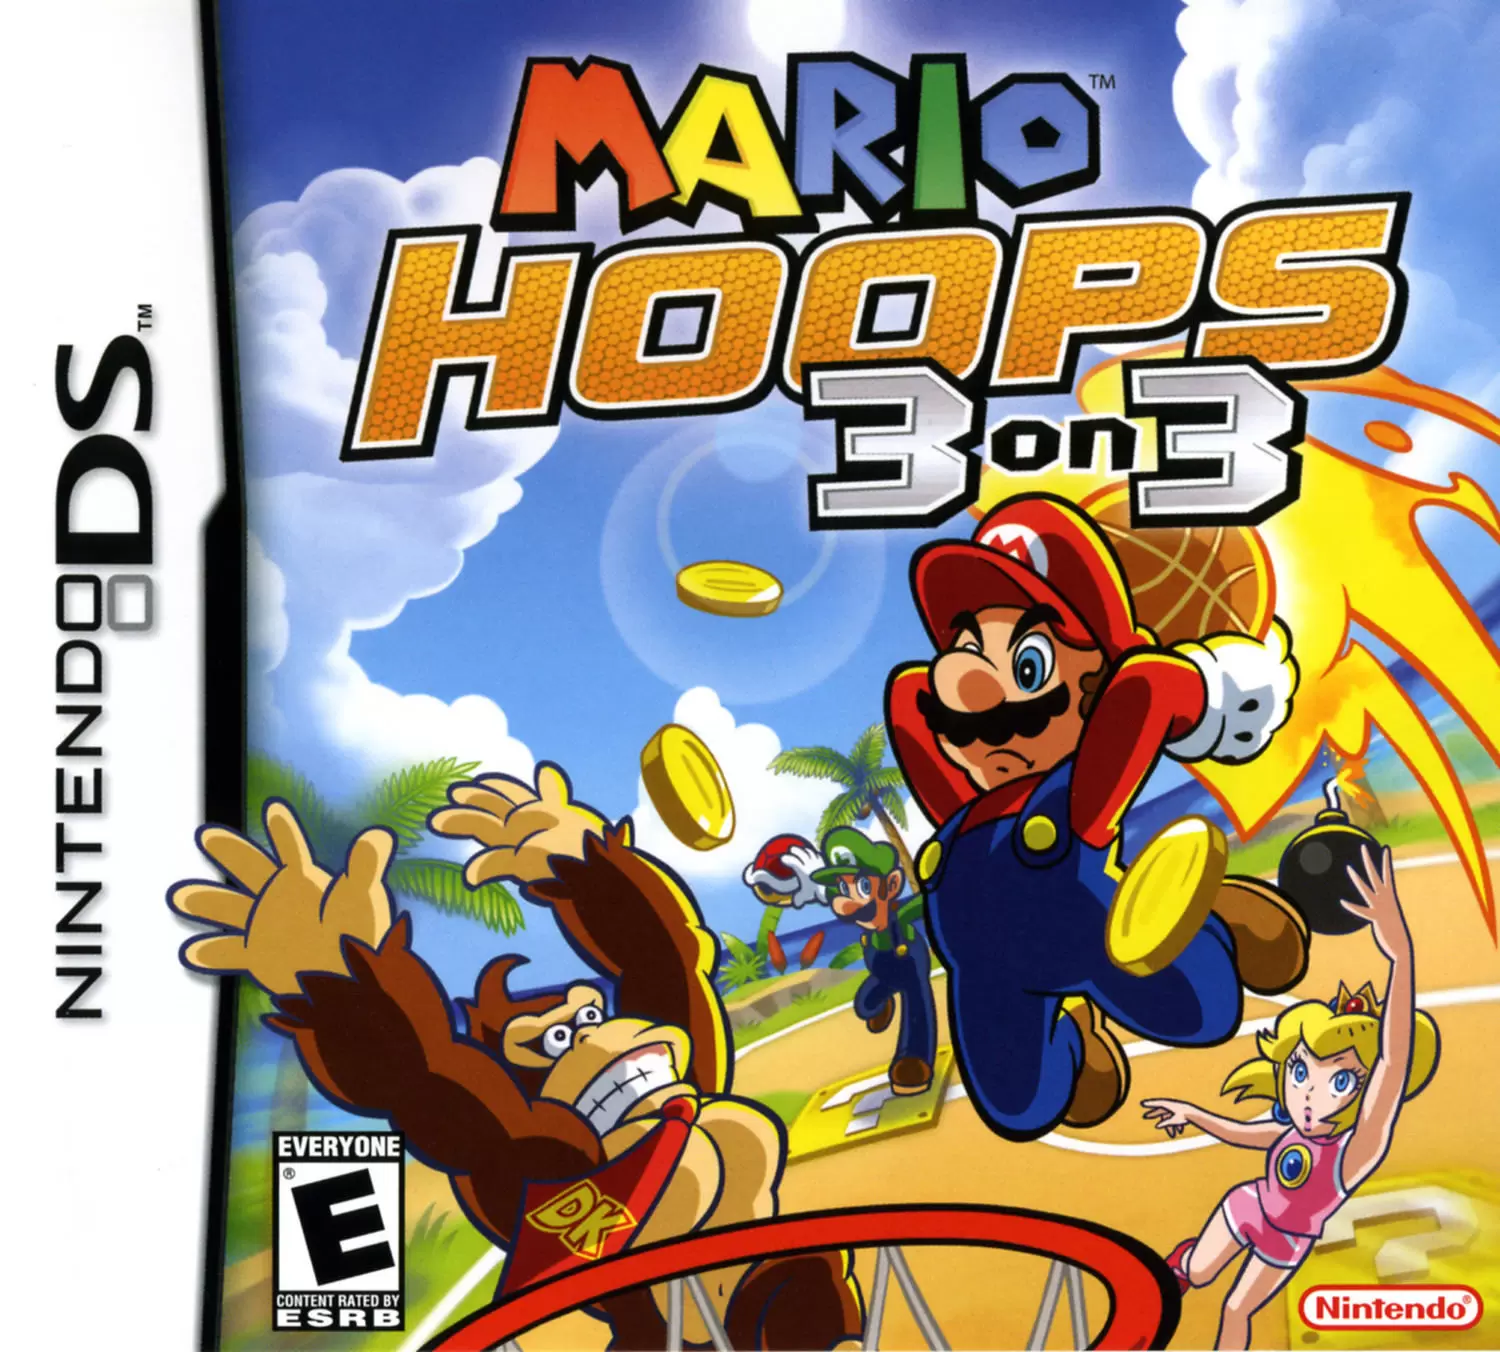 Nintendo DS Games - Mario Hoops 3-on-3